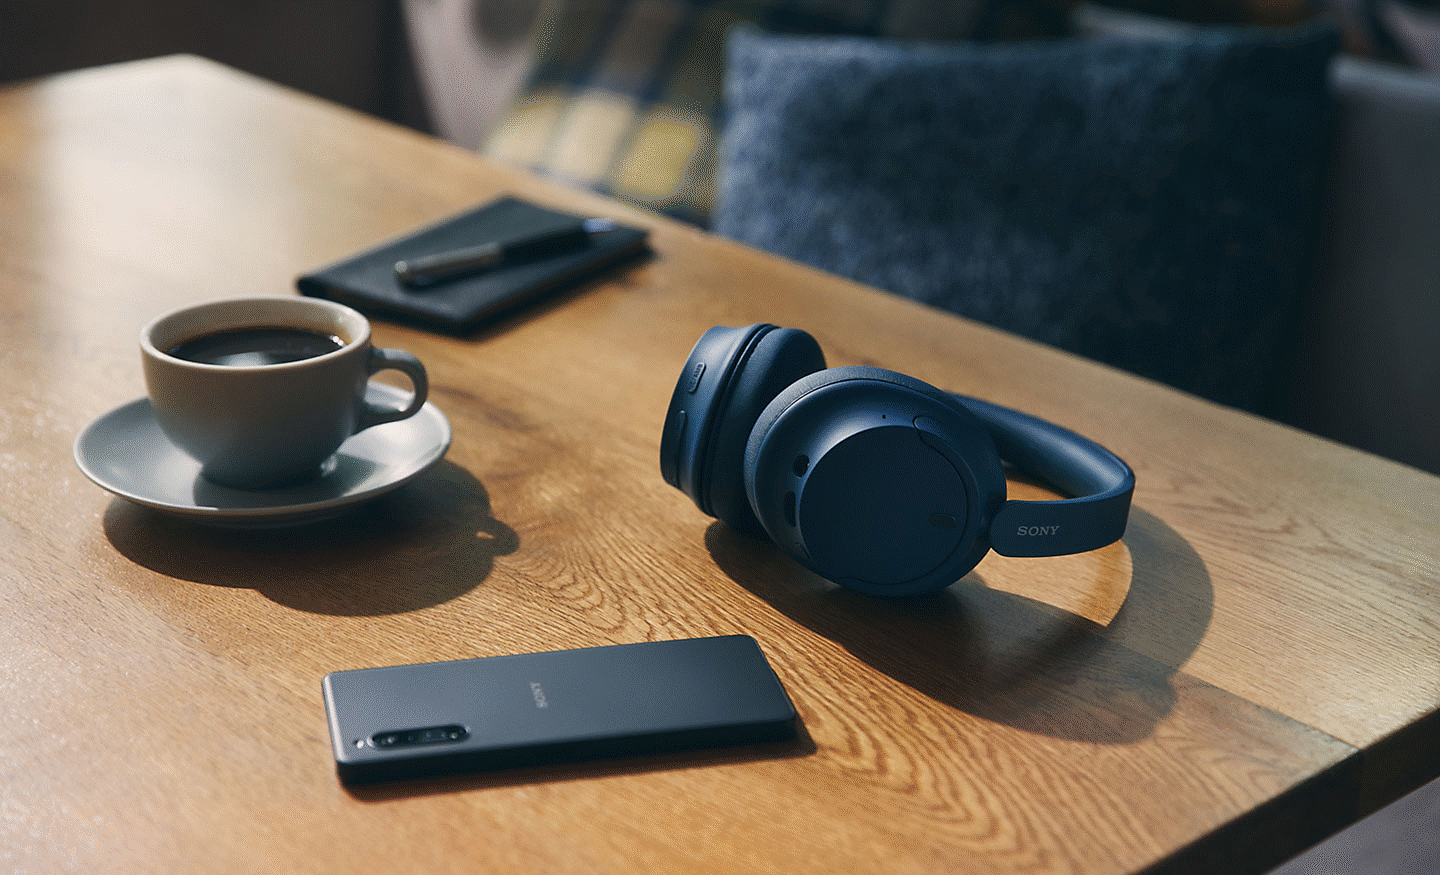 Slika crnih Sony WH-CH720 slušalica na stolu uz Xperia mobilni telefon